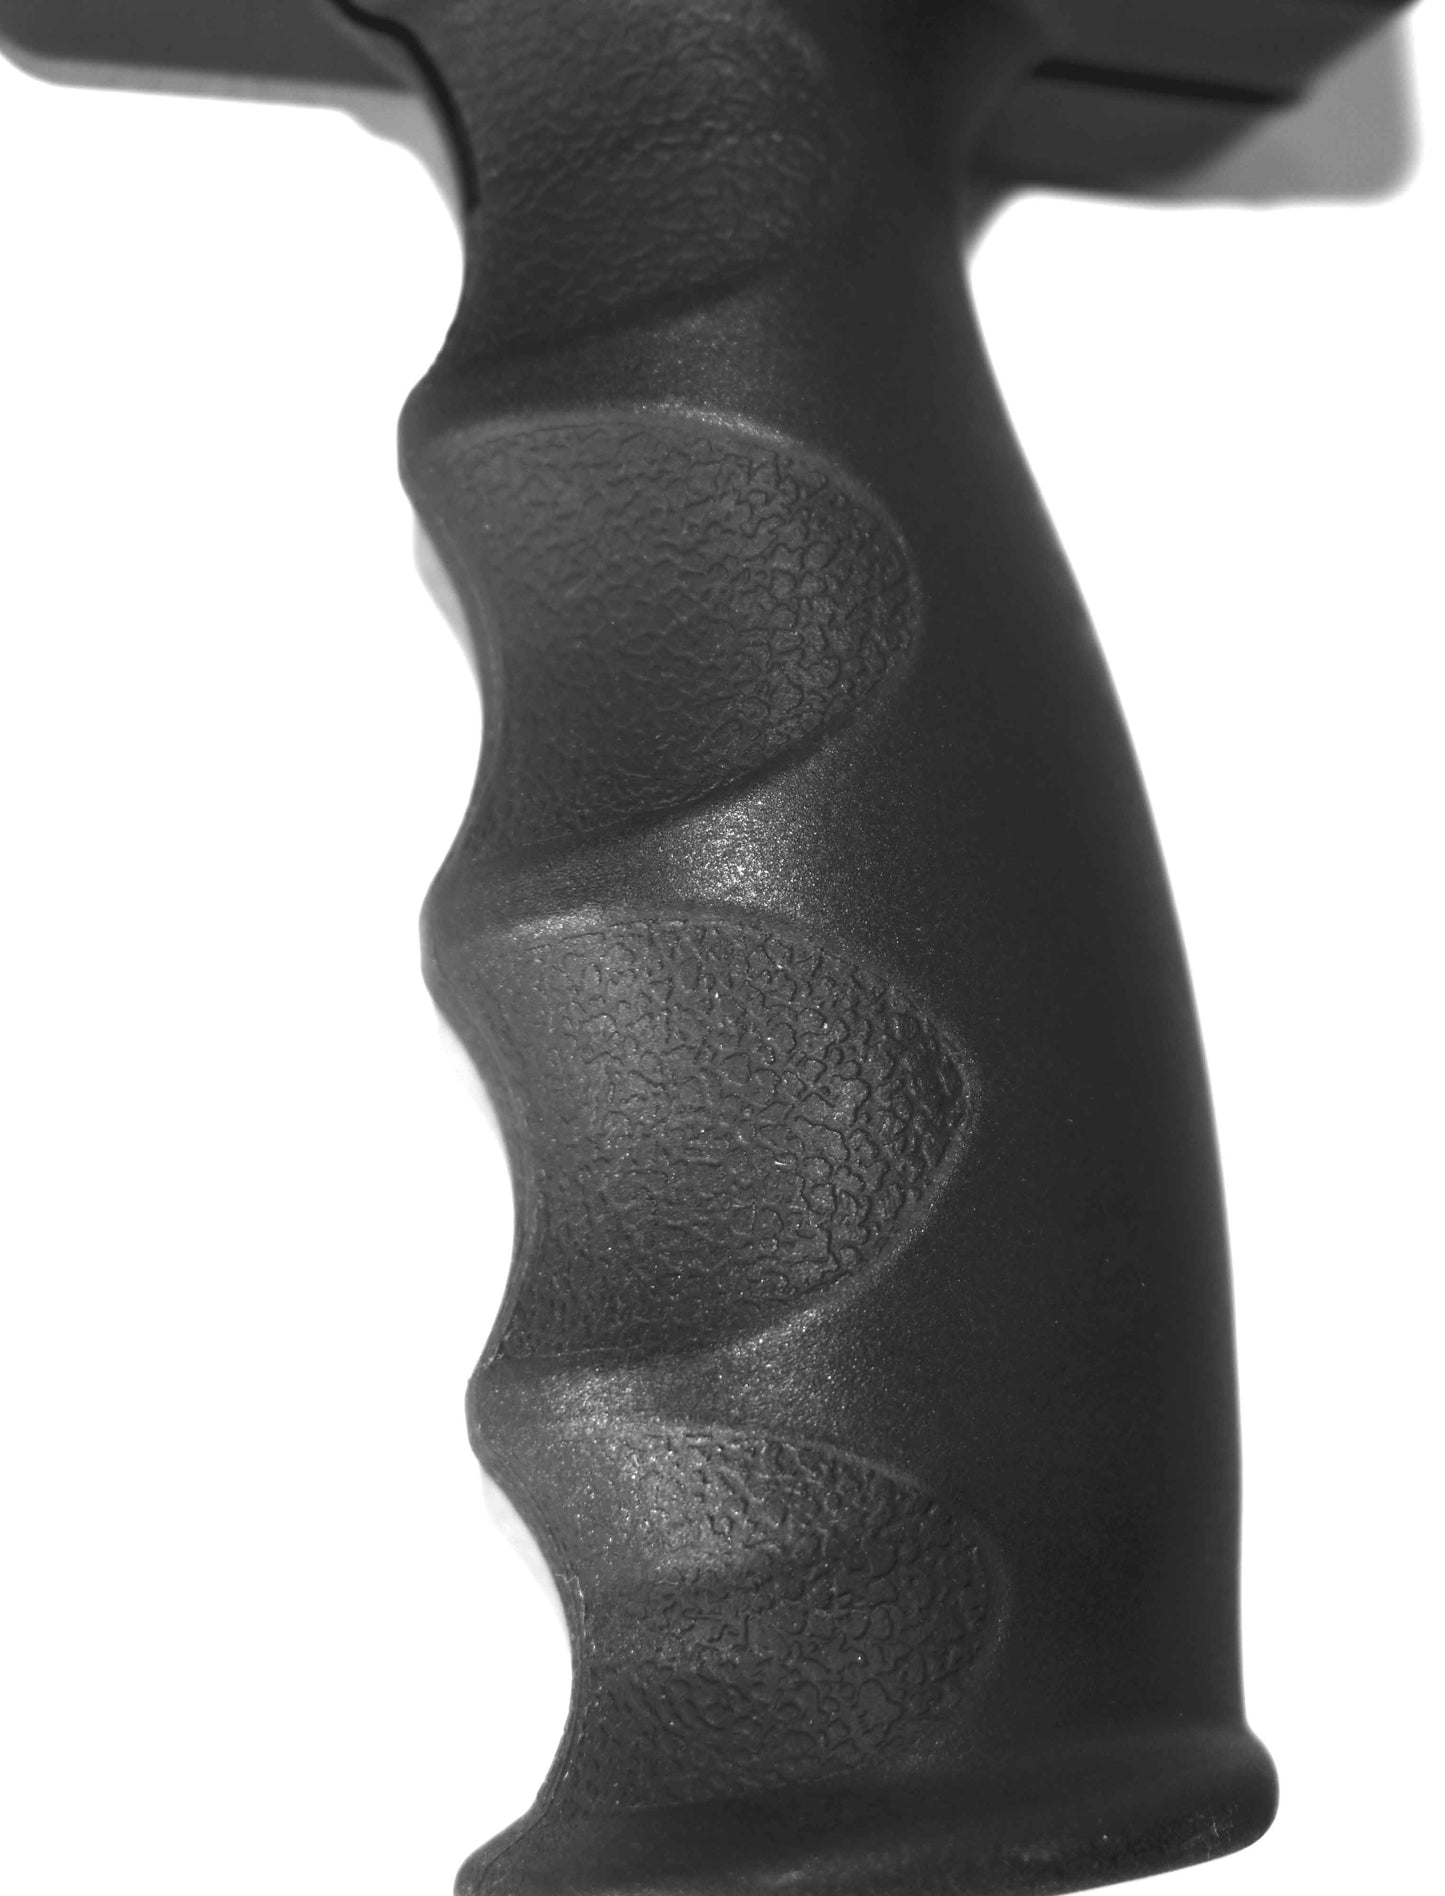 Tactical grip black for Tippmann Cronus paintball gun.